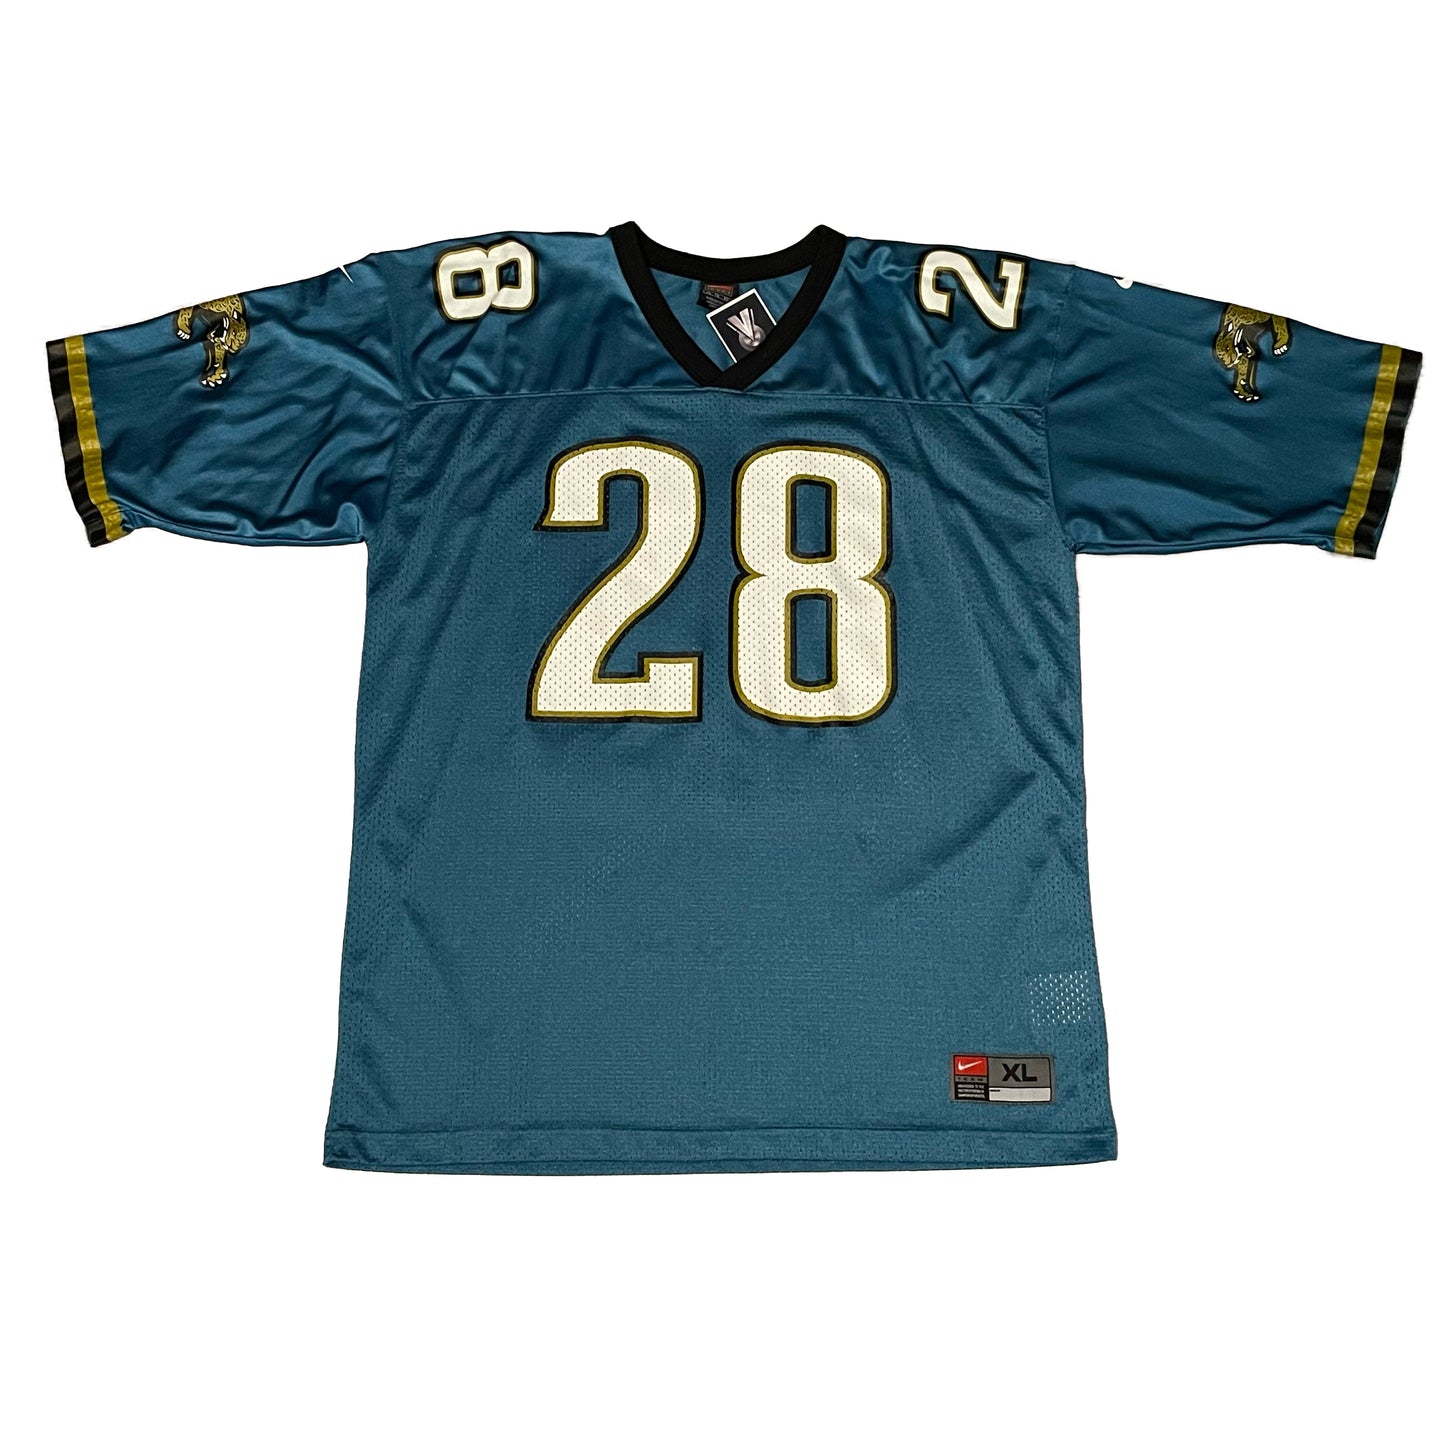 Jacksonville Jaguars Fred Taylor NIKE jersey size XL